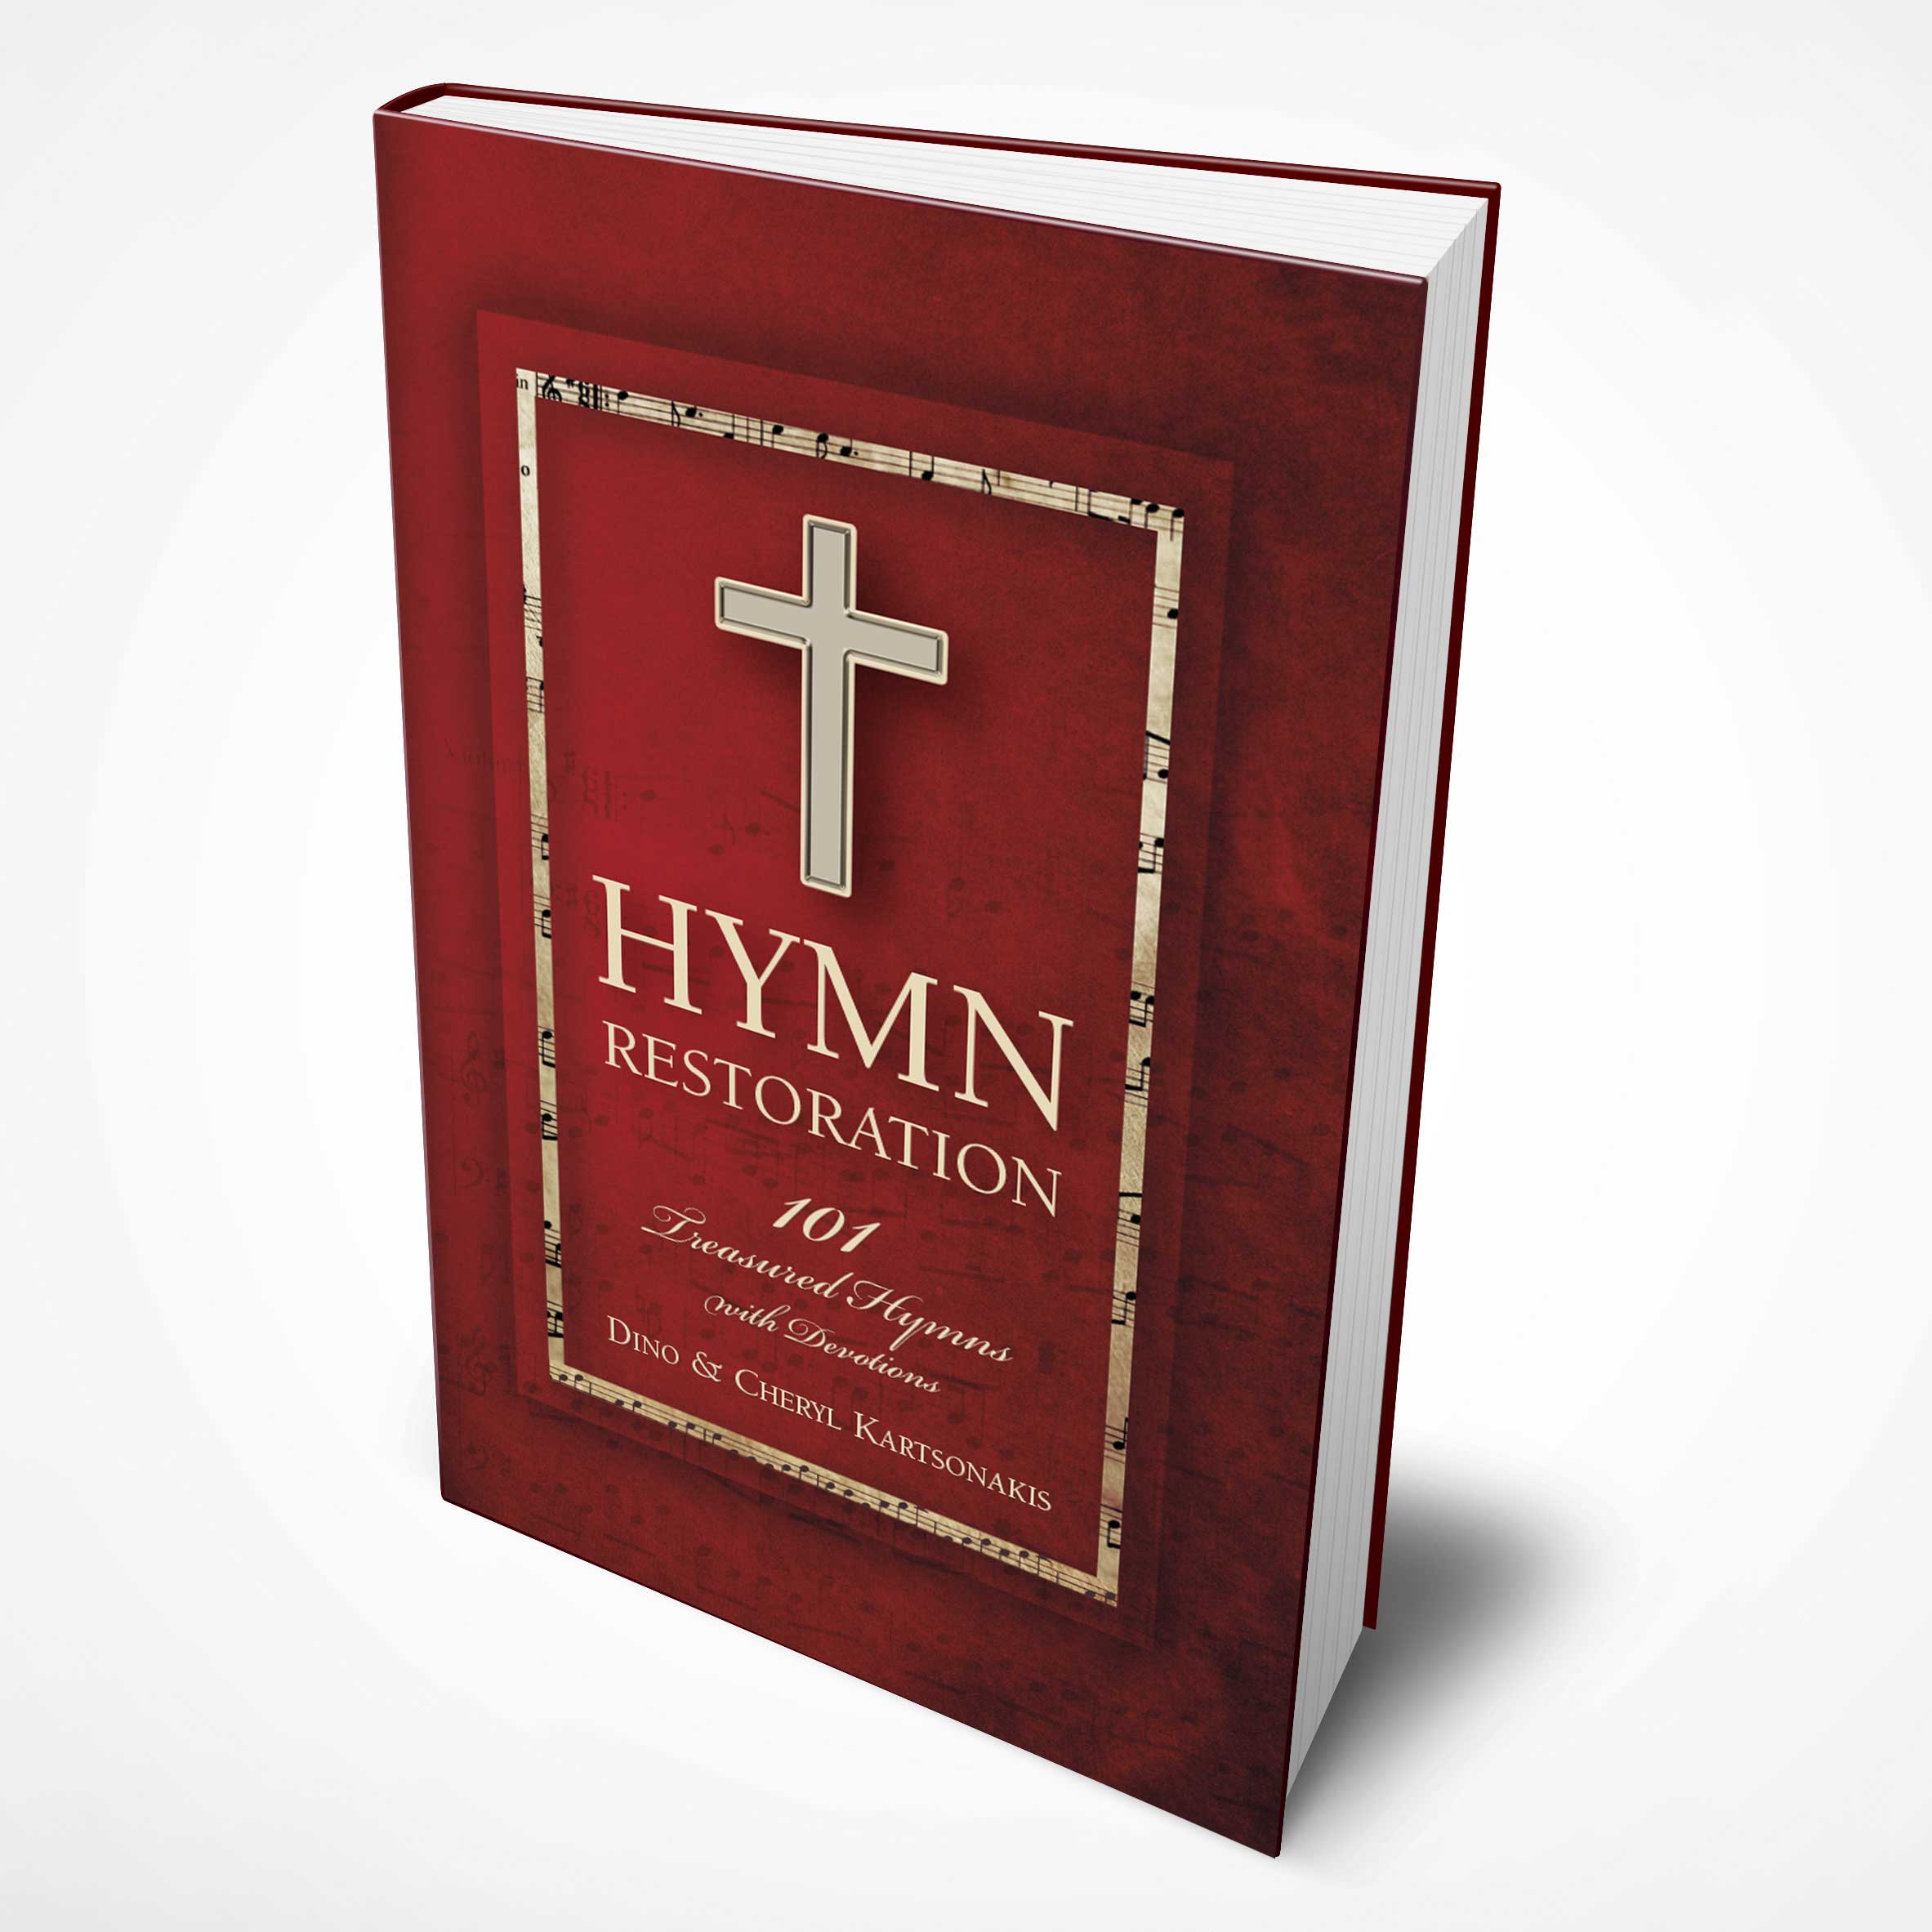 Hymn Restoration